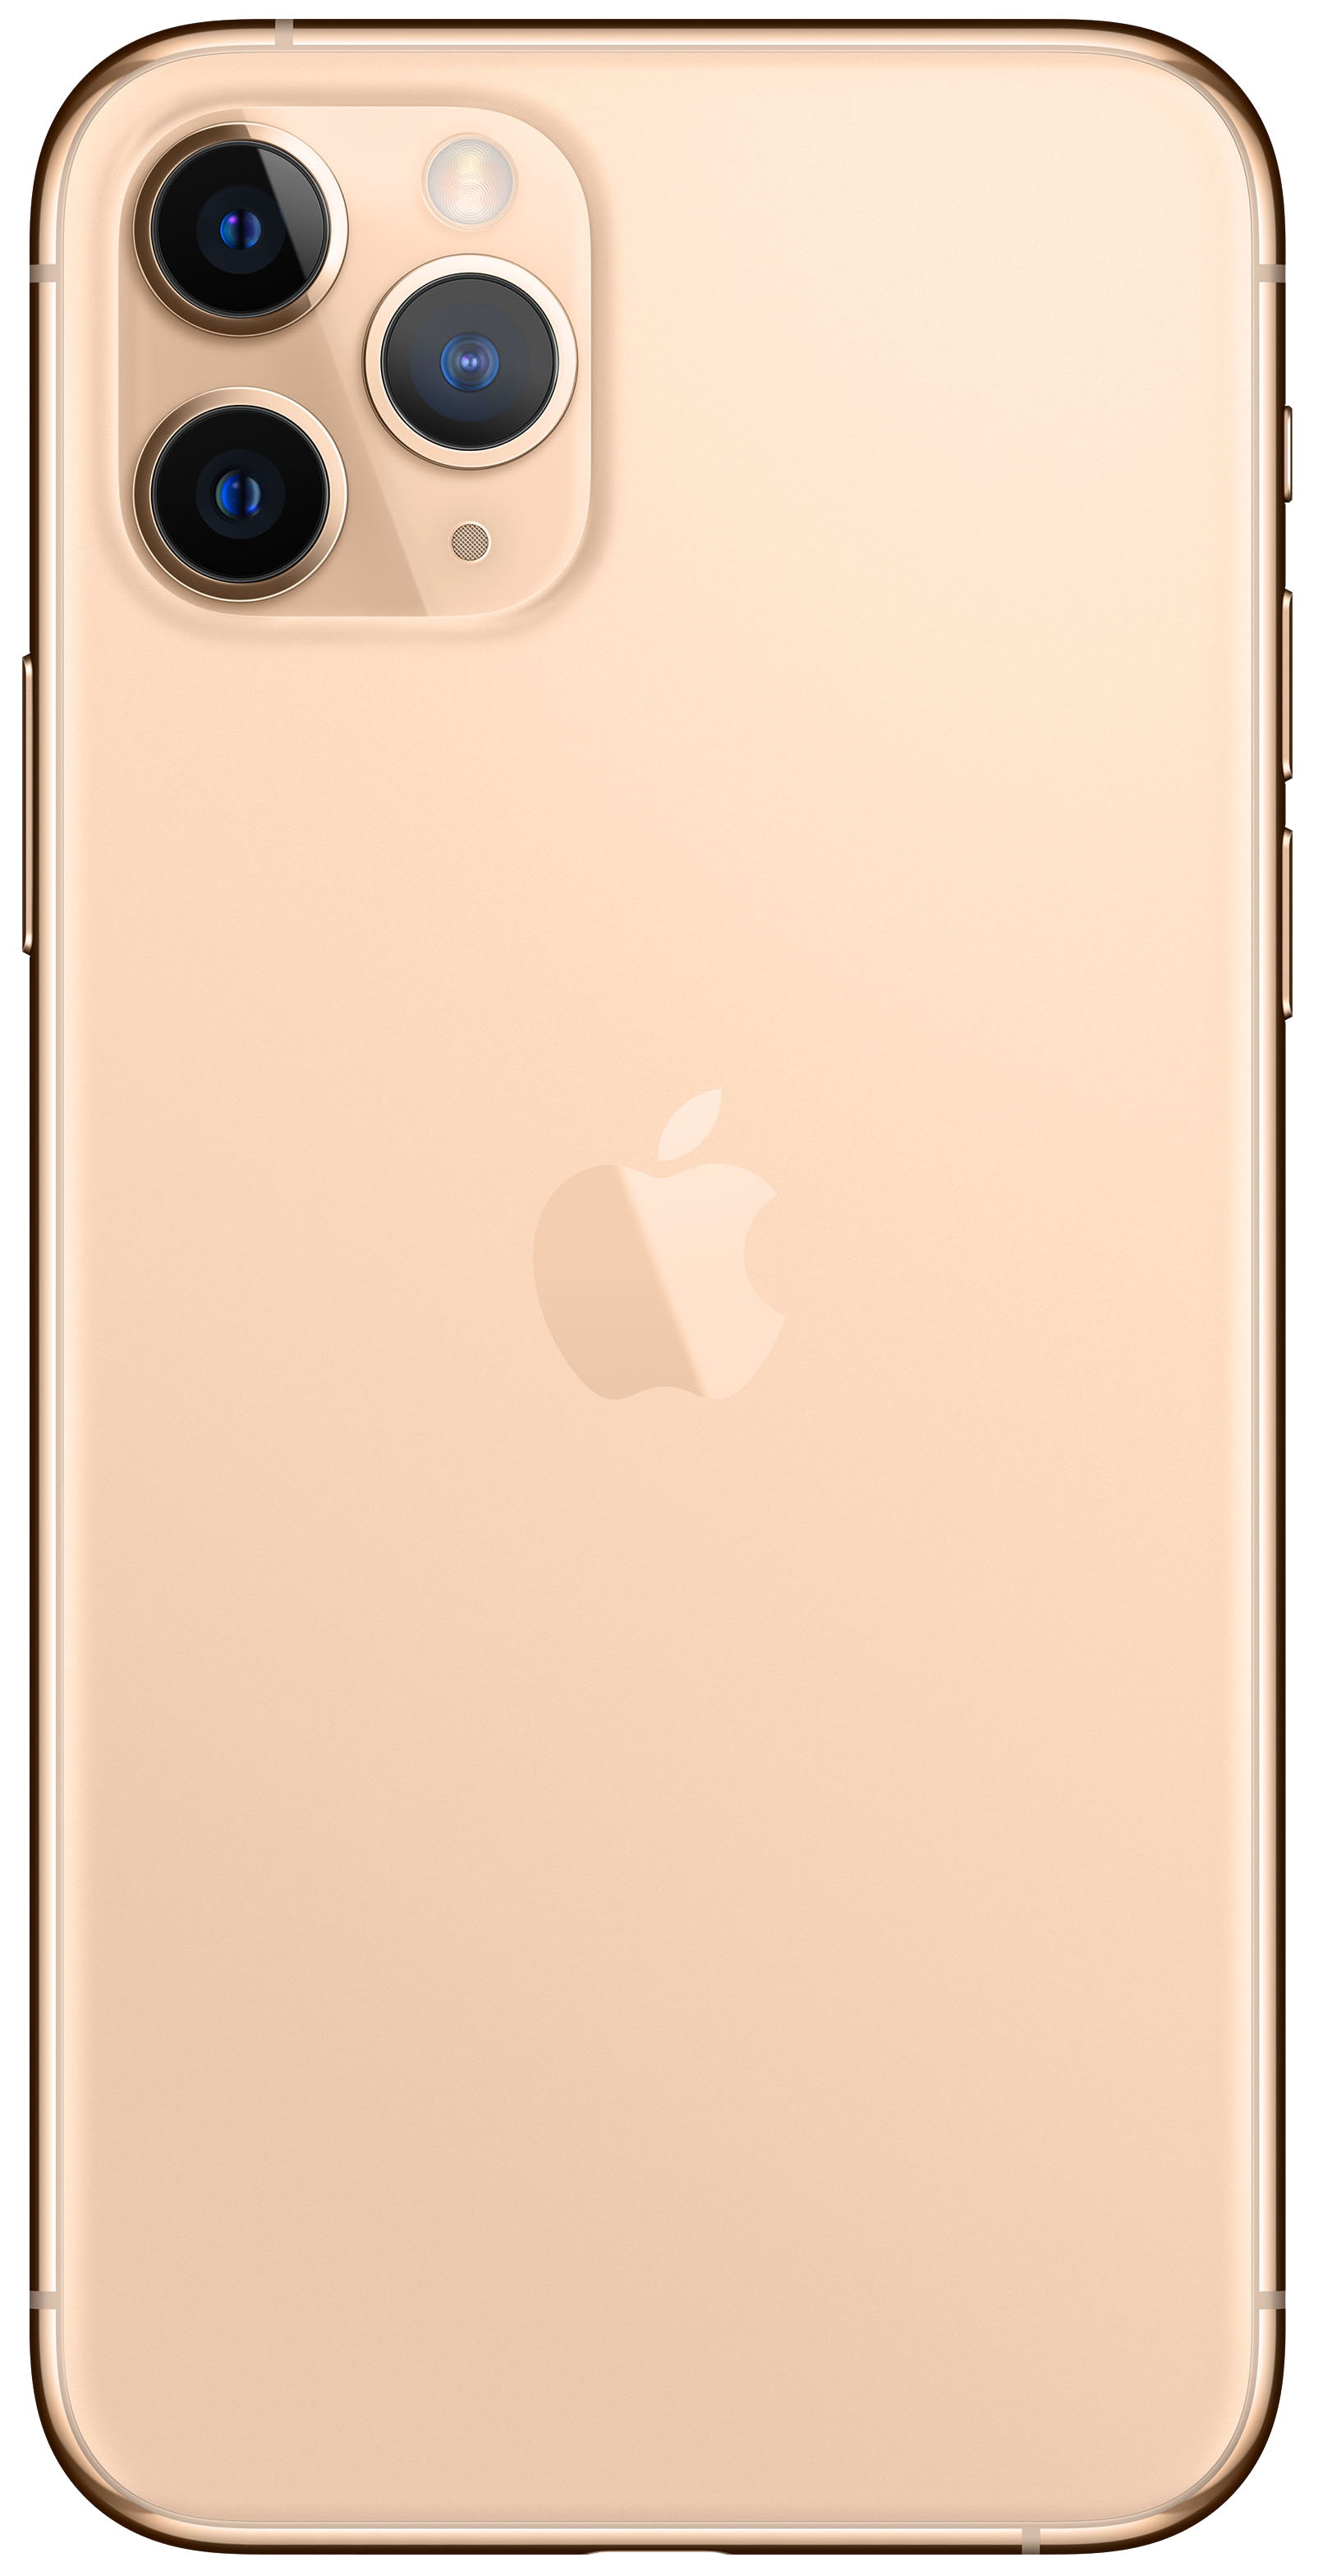 iPhone 8 Plus 256GB Dorado - ReciclaTecnologia